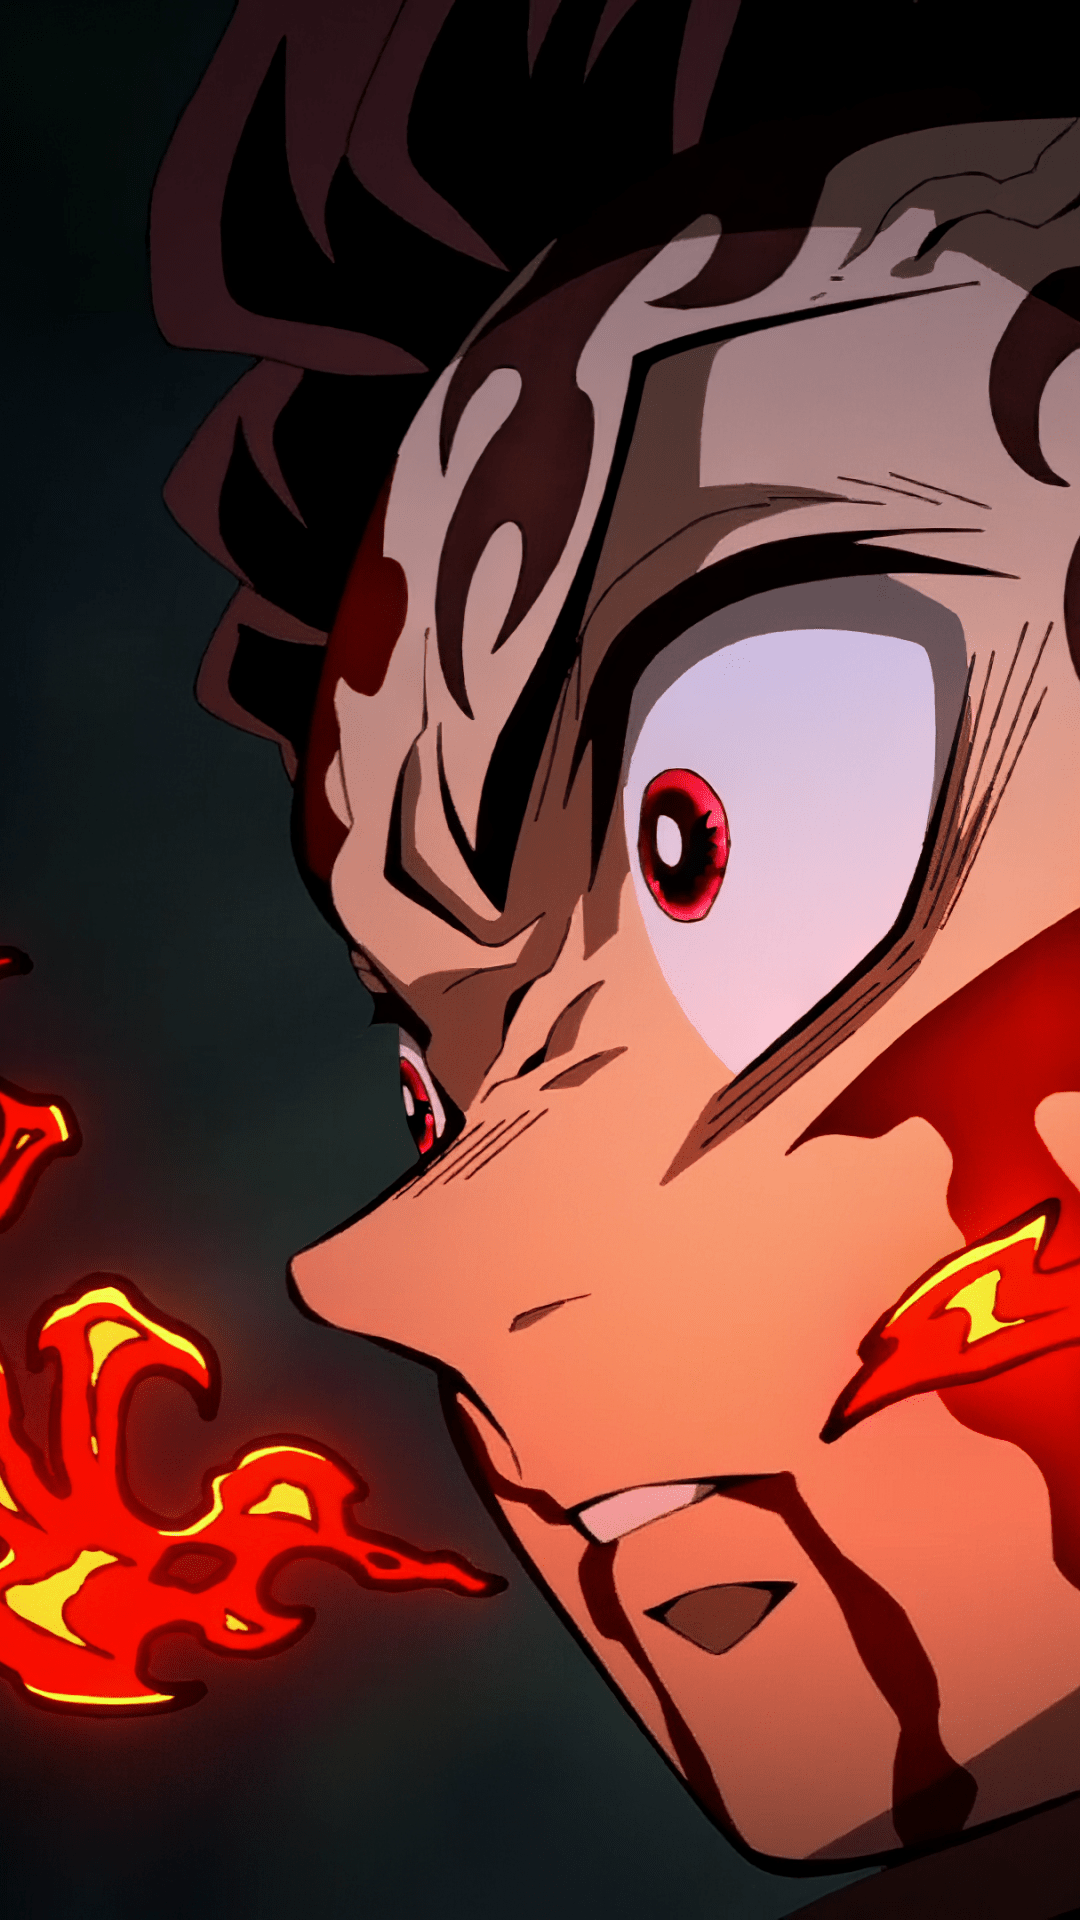 Demon Slayer anime wallpaper featuring Tanjiro staring at a red flame - Tanjiro Kamado